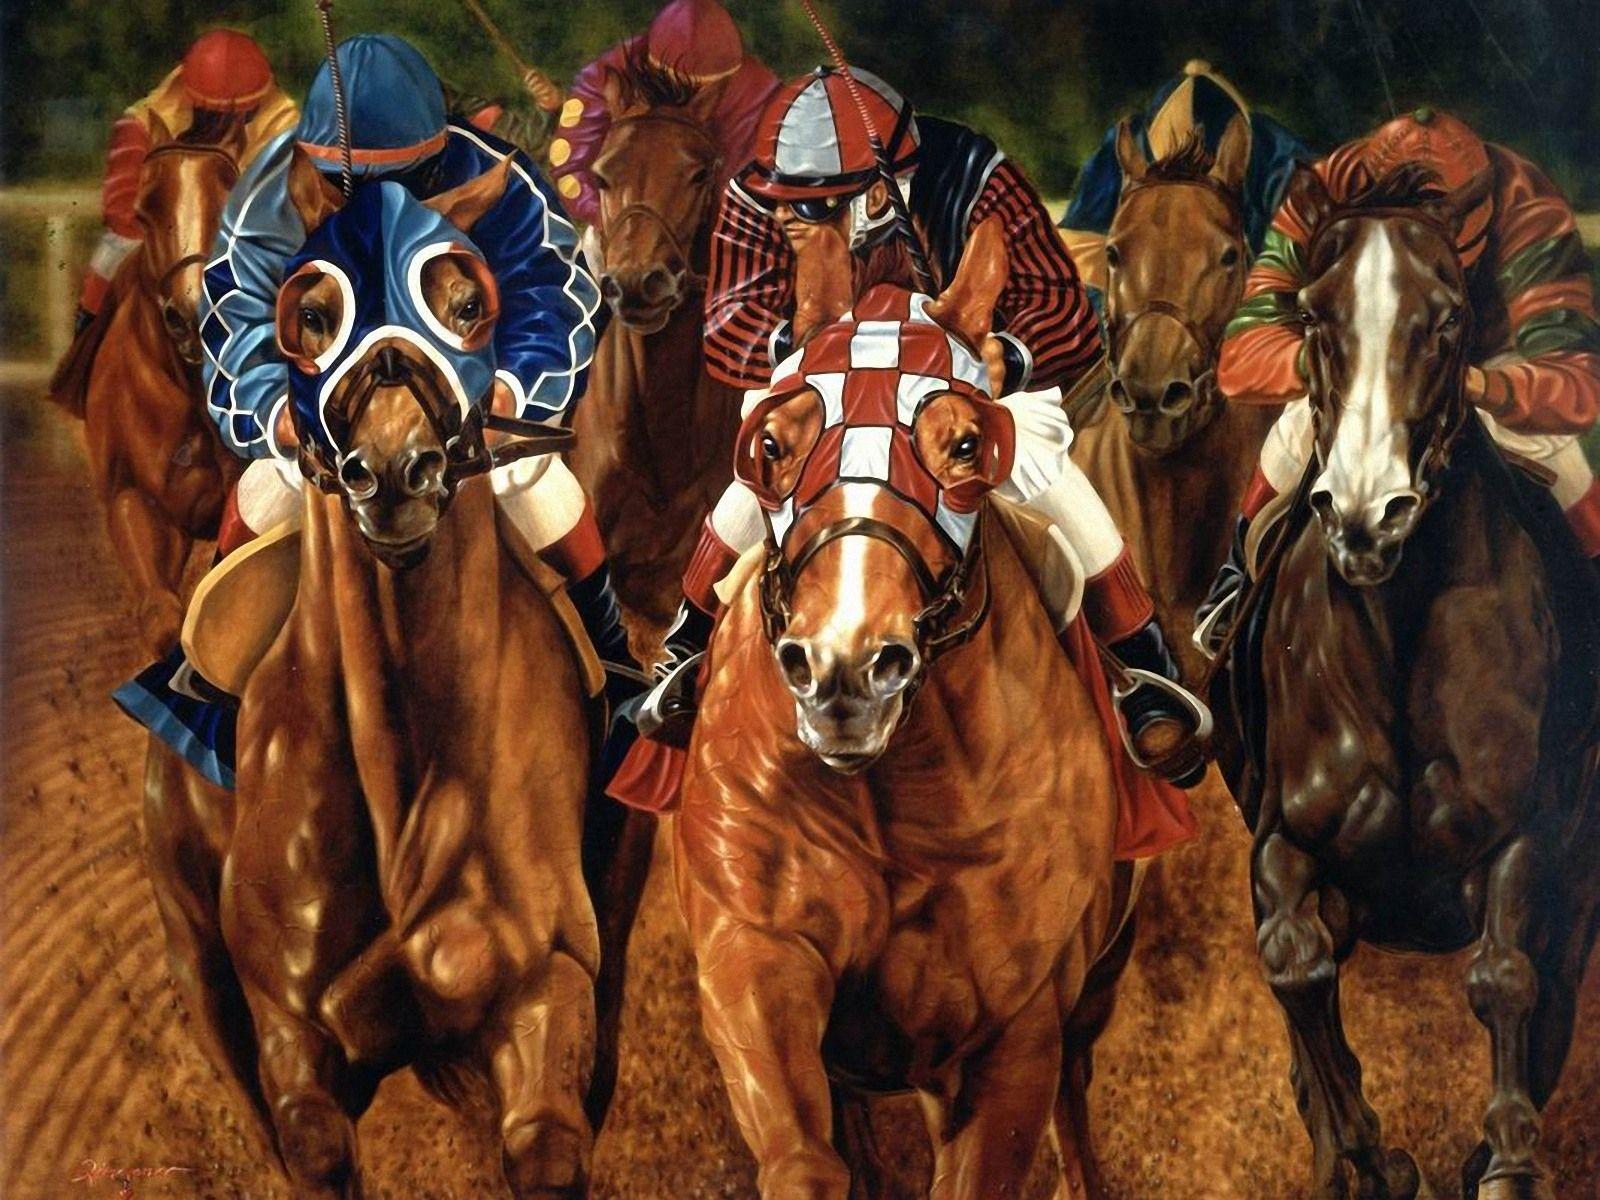 equine artists. Horse Racing art 1600x1200 Wallpaper, 1600x1200 Wallpaper & Picture. Horses, Thoroughbred horse racing, Horse painting